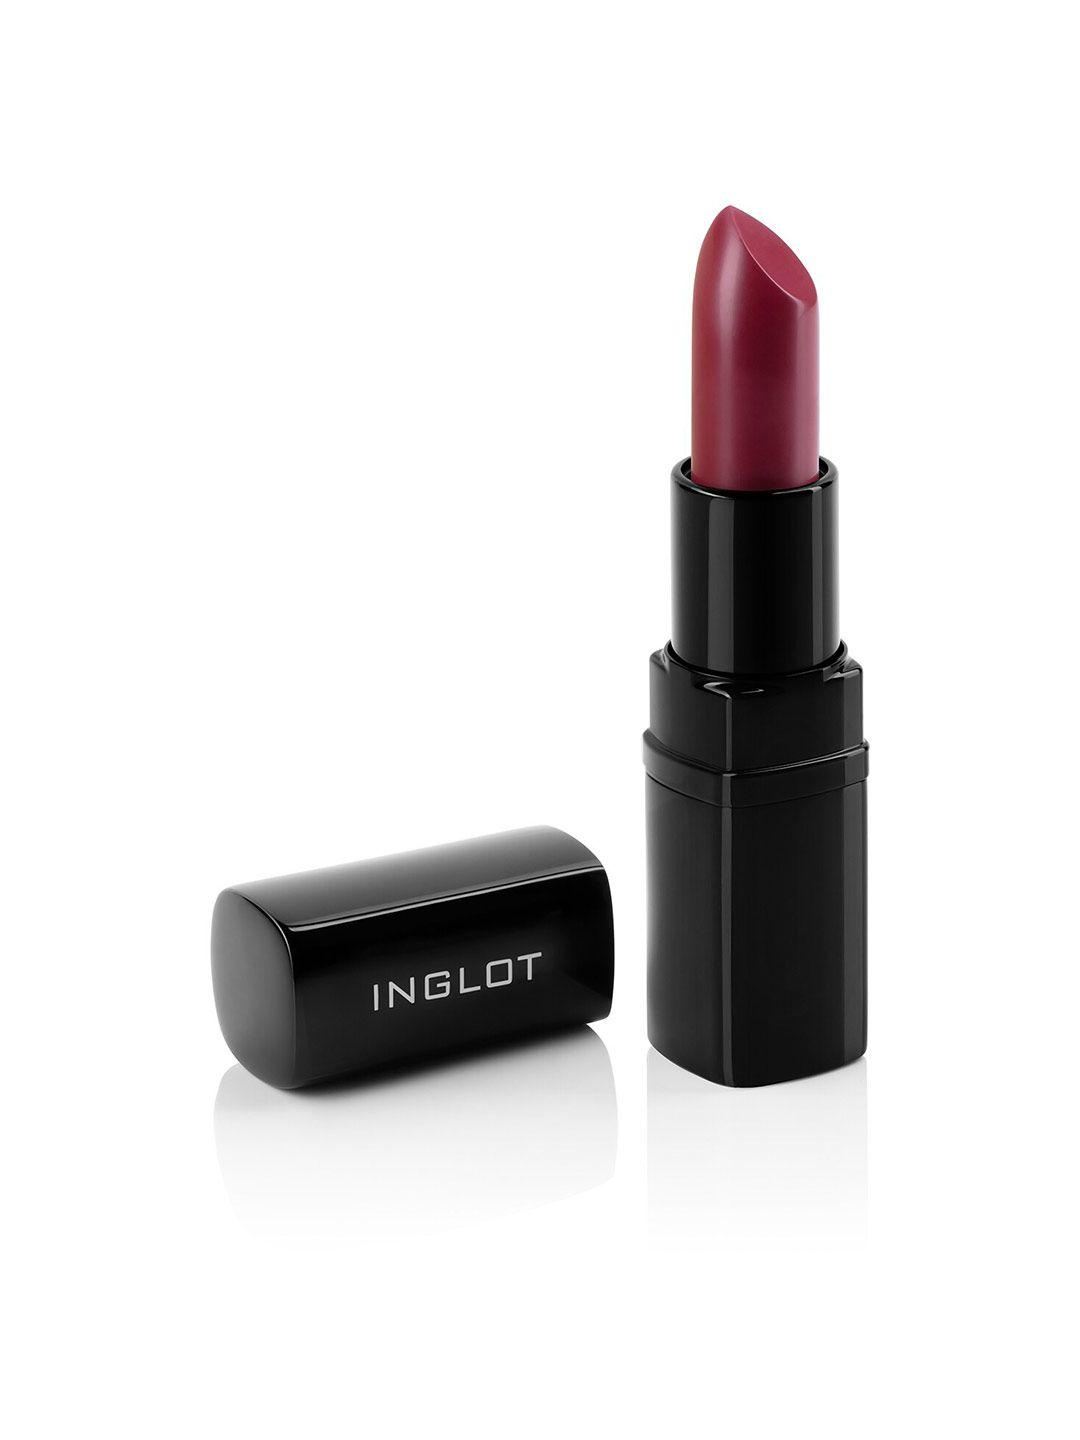 inglot matte lipstick enriched with vitamin e - 419